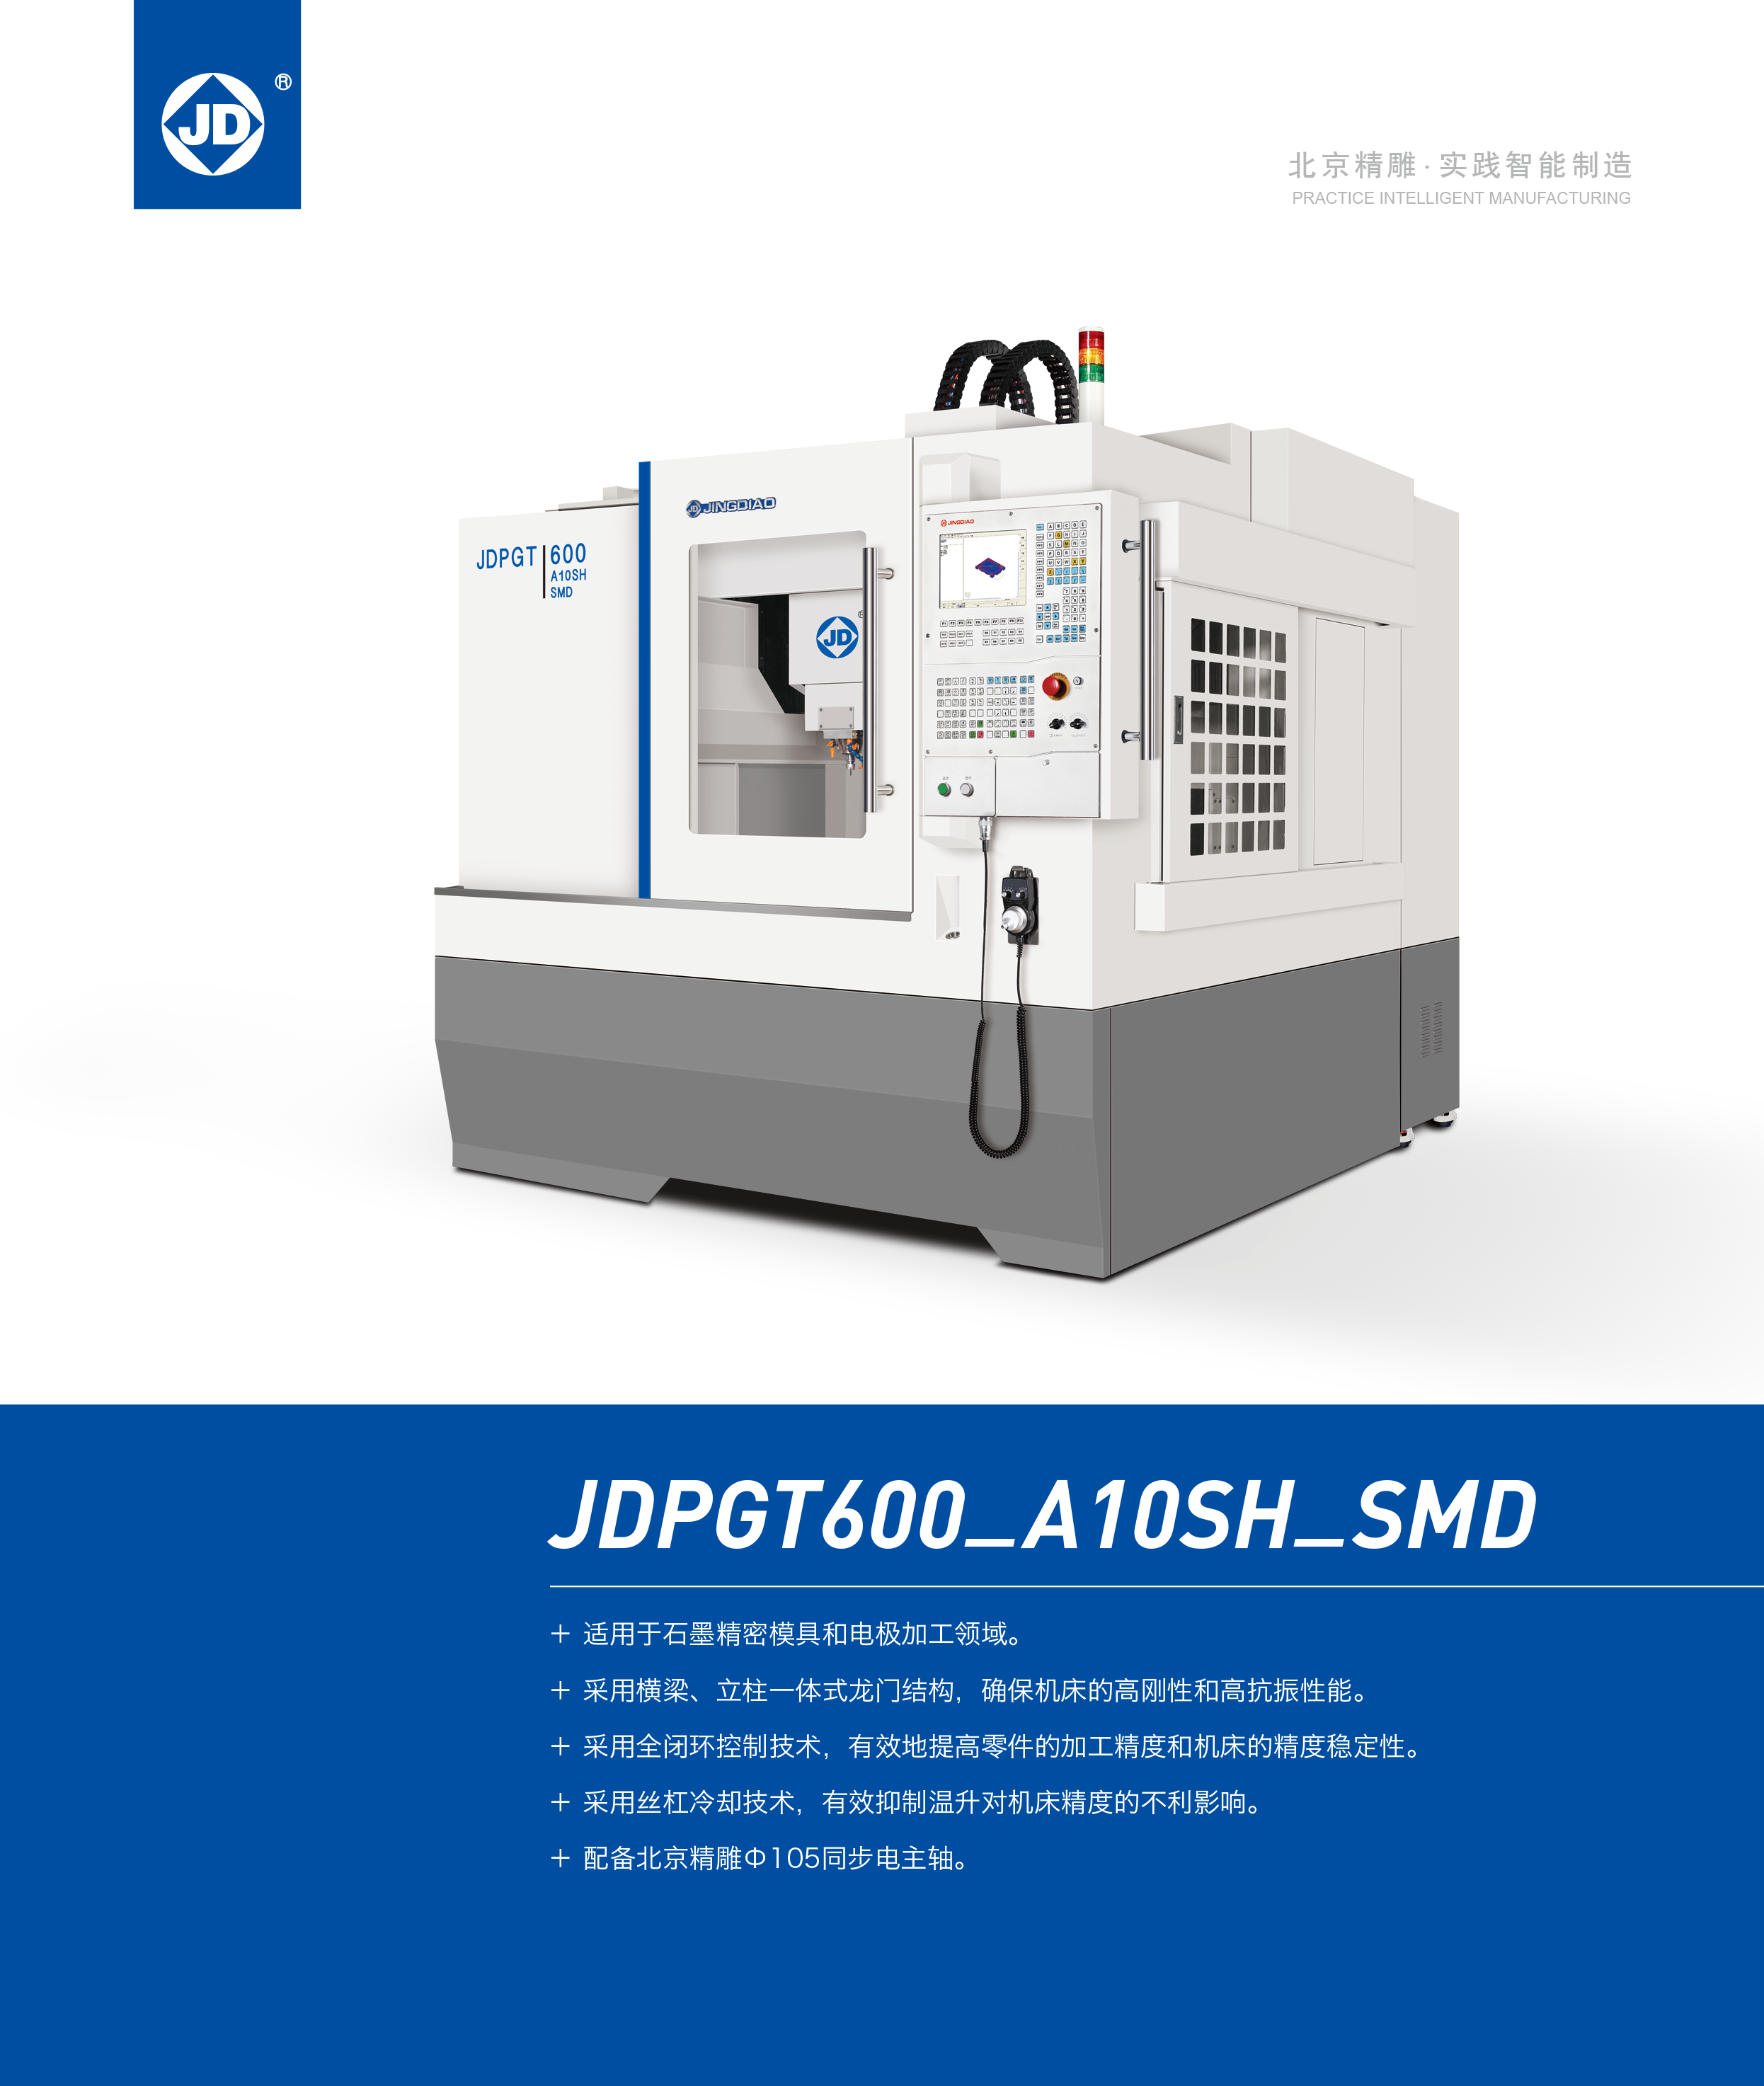 JDHGT600-A13S-SMD